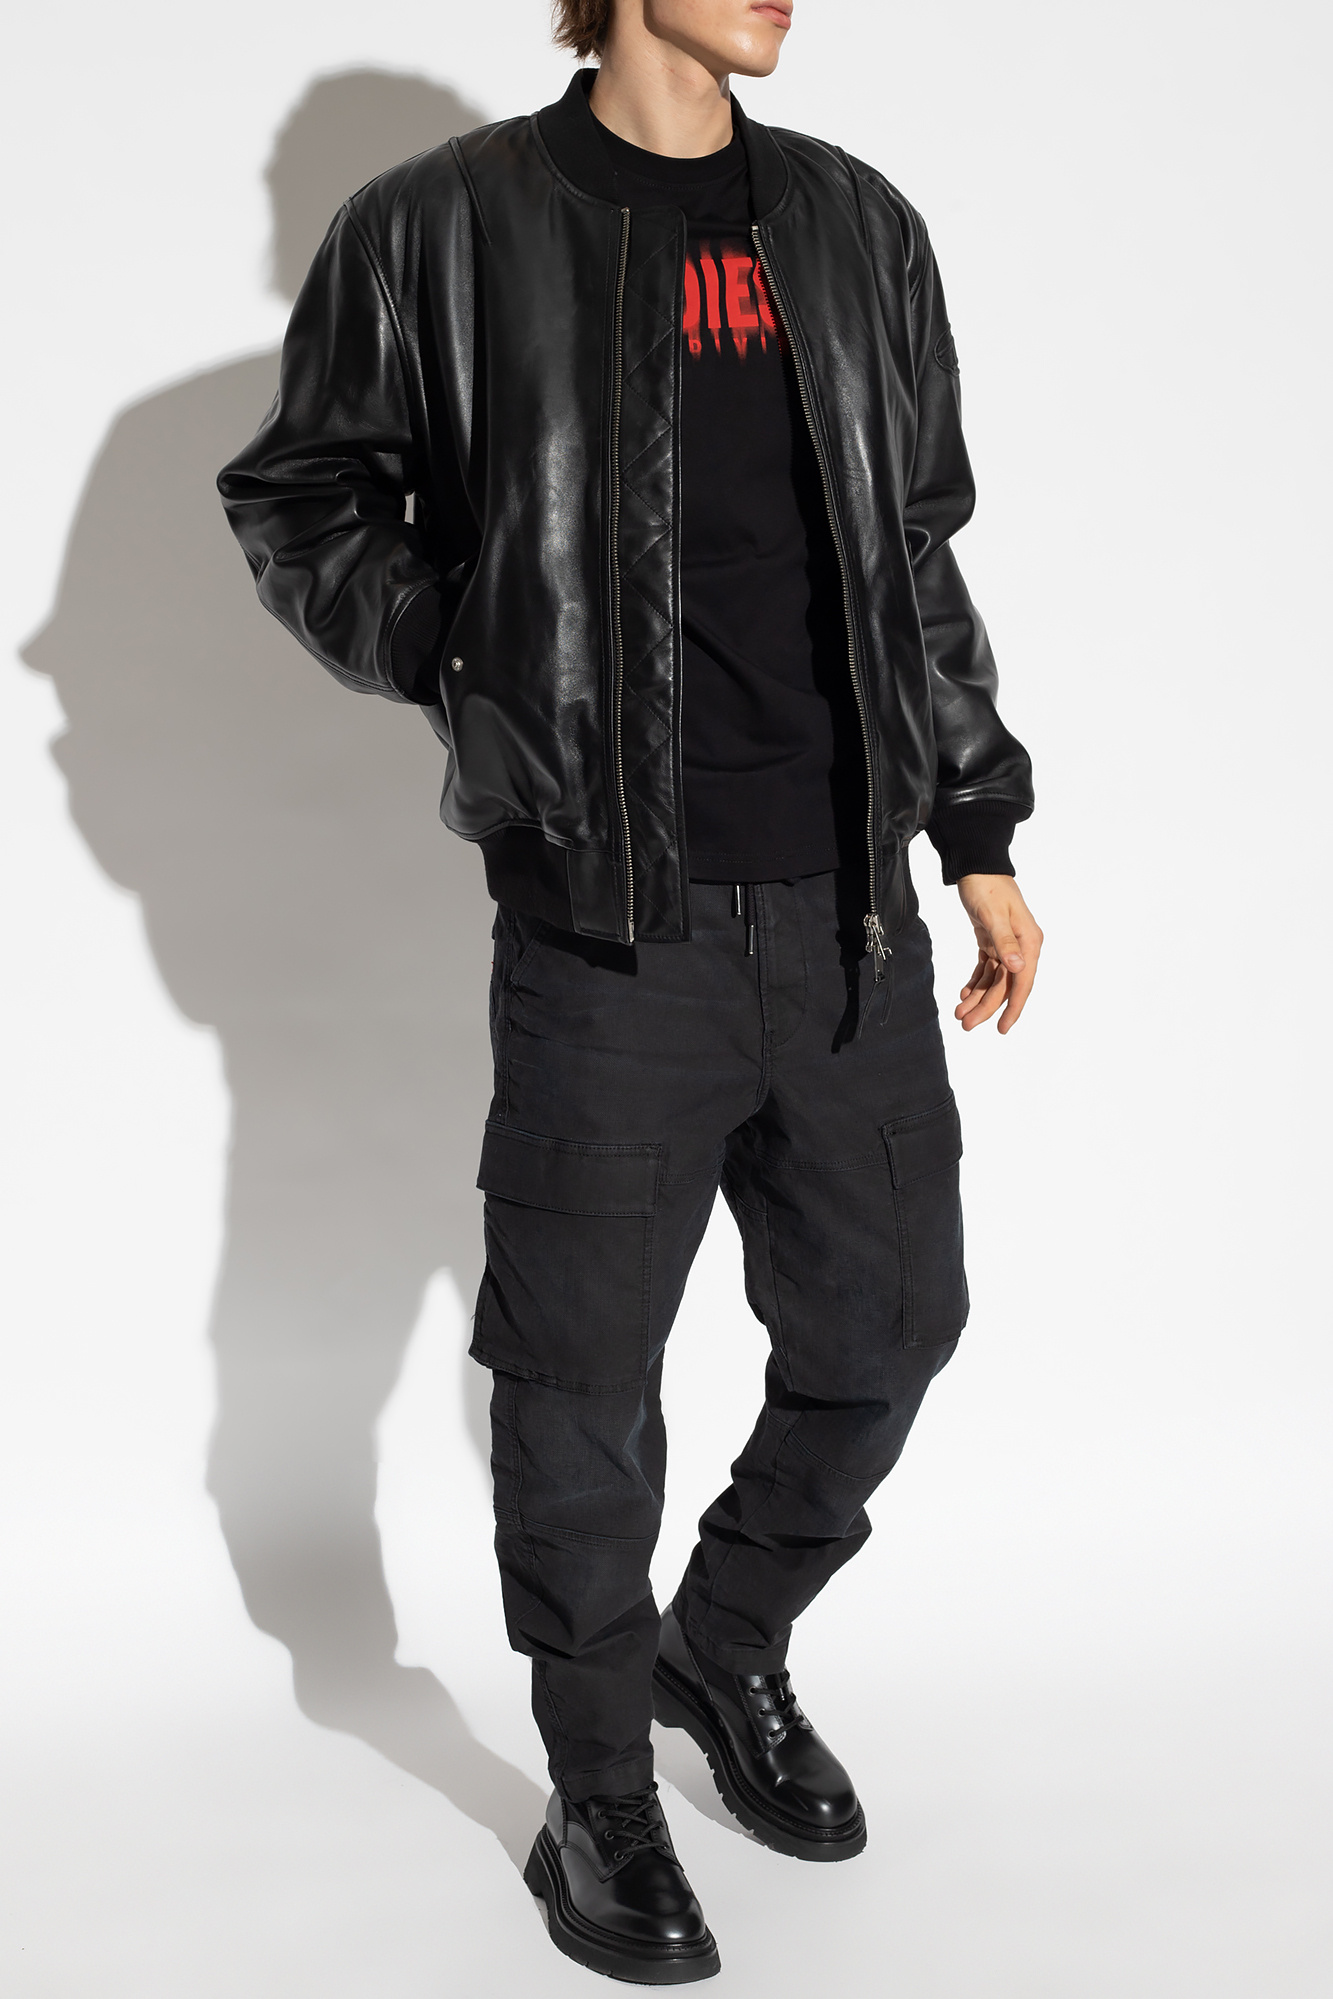 Diesel ‘L-PRITTS’ leather jacket | Men's Clothing | Vitkac